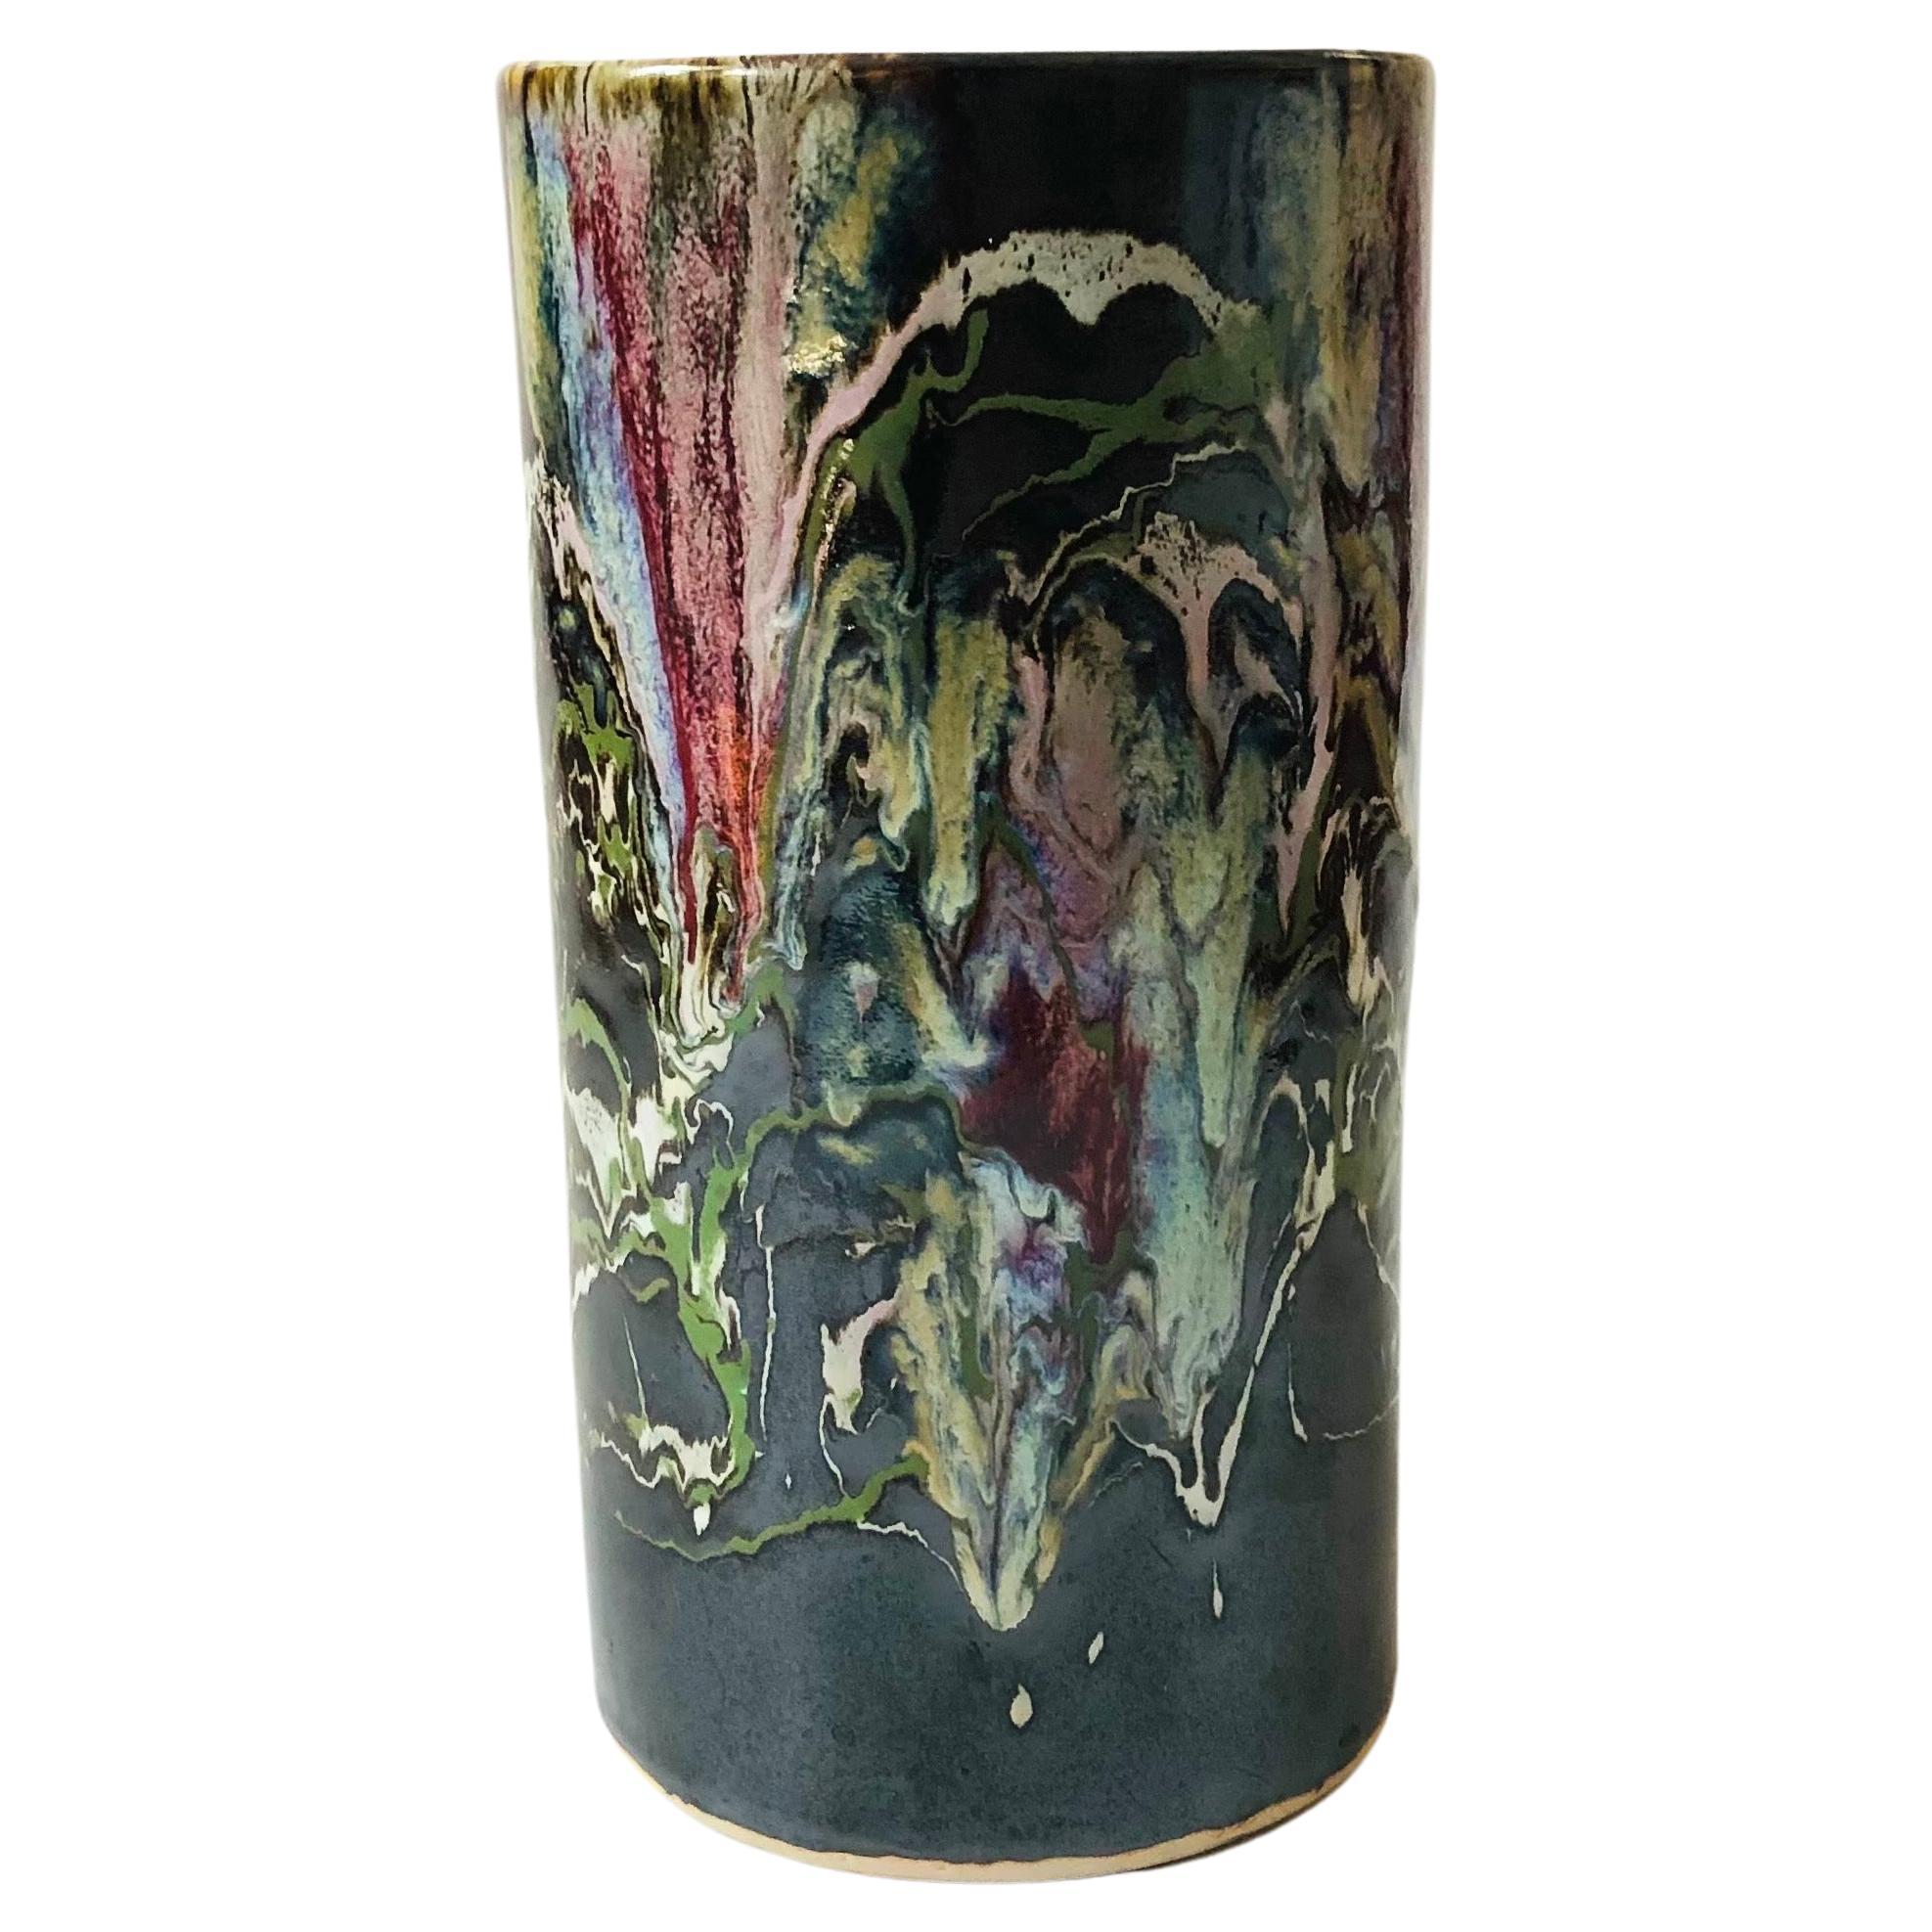 Große Zylinder-Tropfen-Keramik-Vase